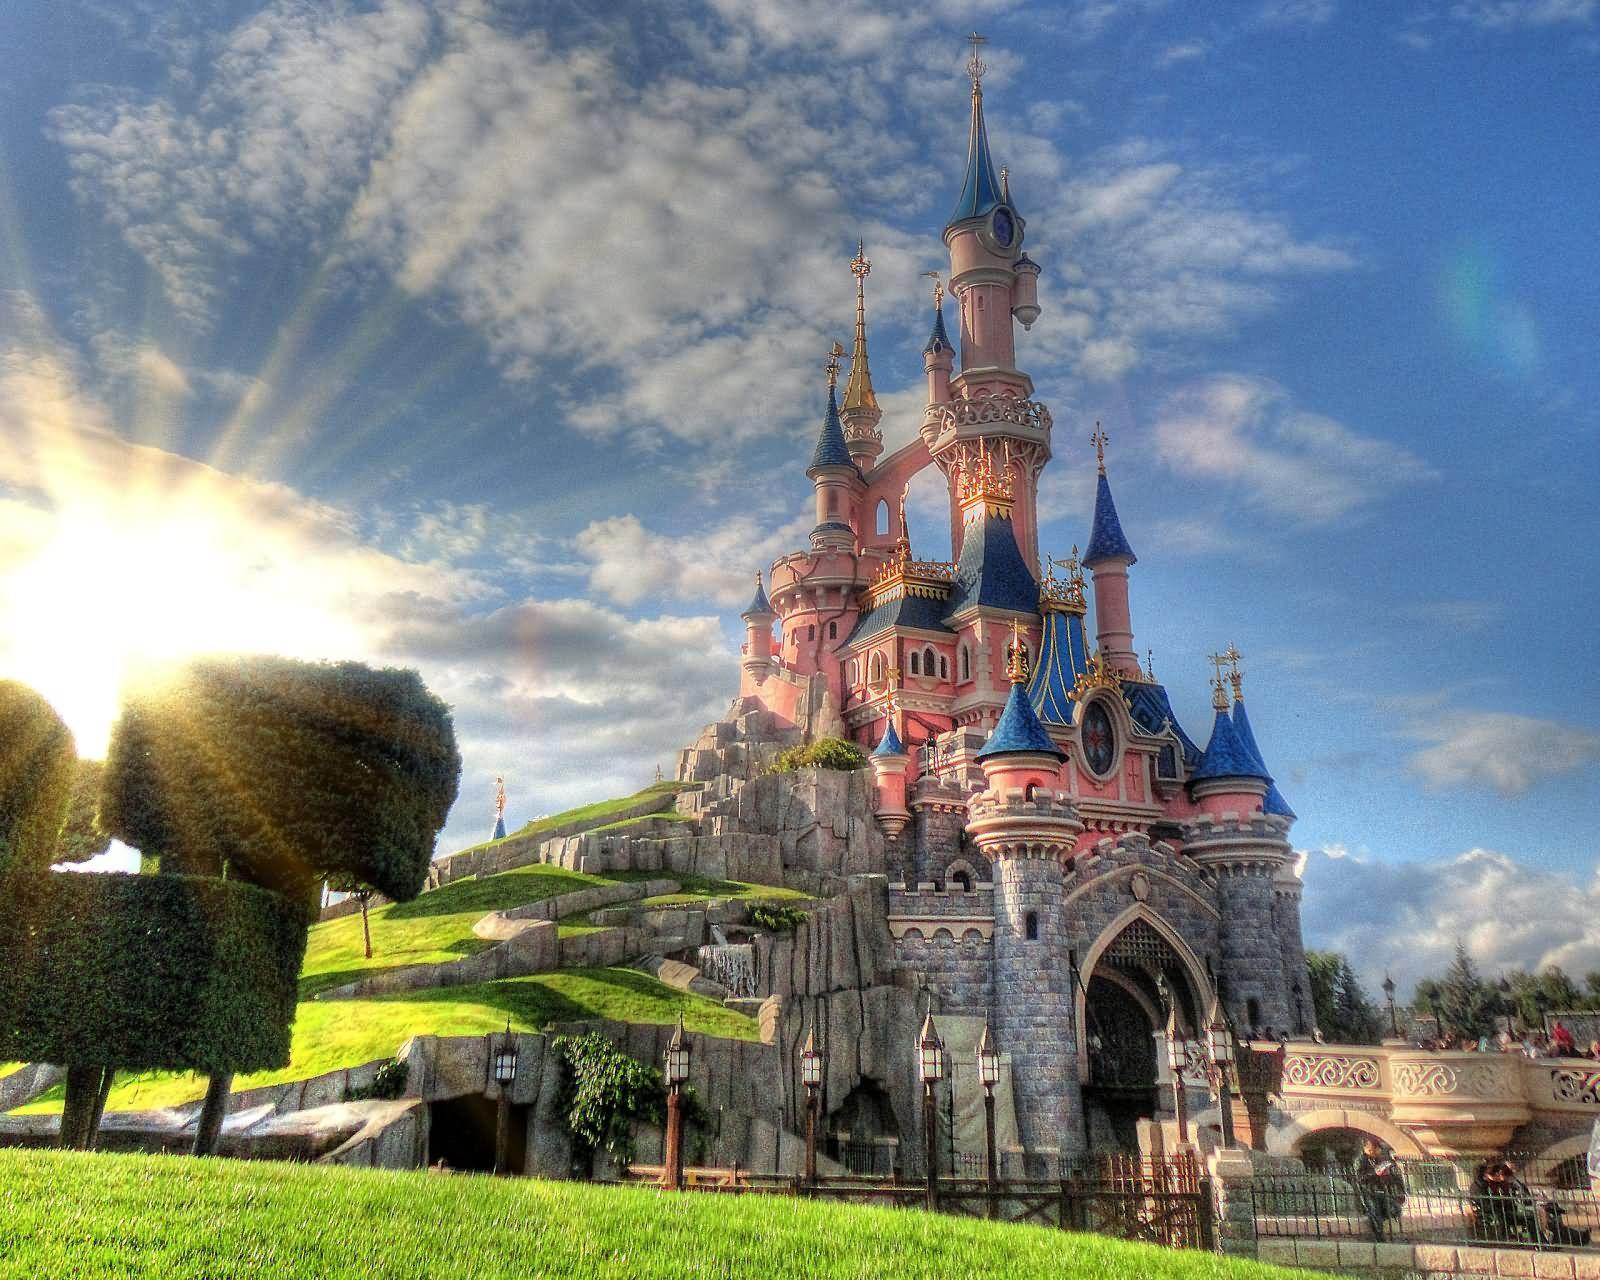 Download Disneyland Paris With Tinkerbell Silhouette Wallpaper